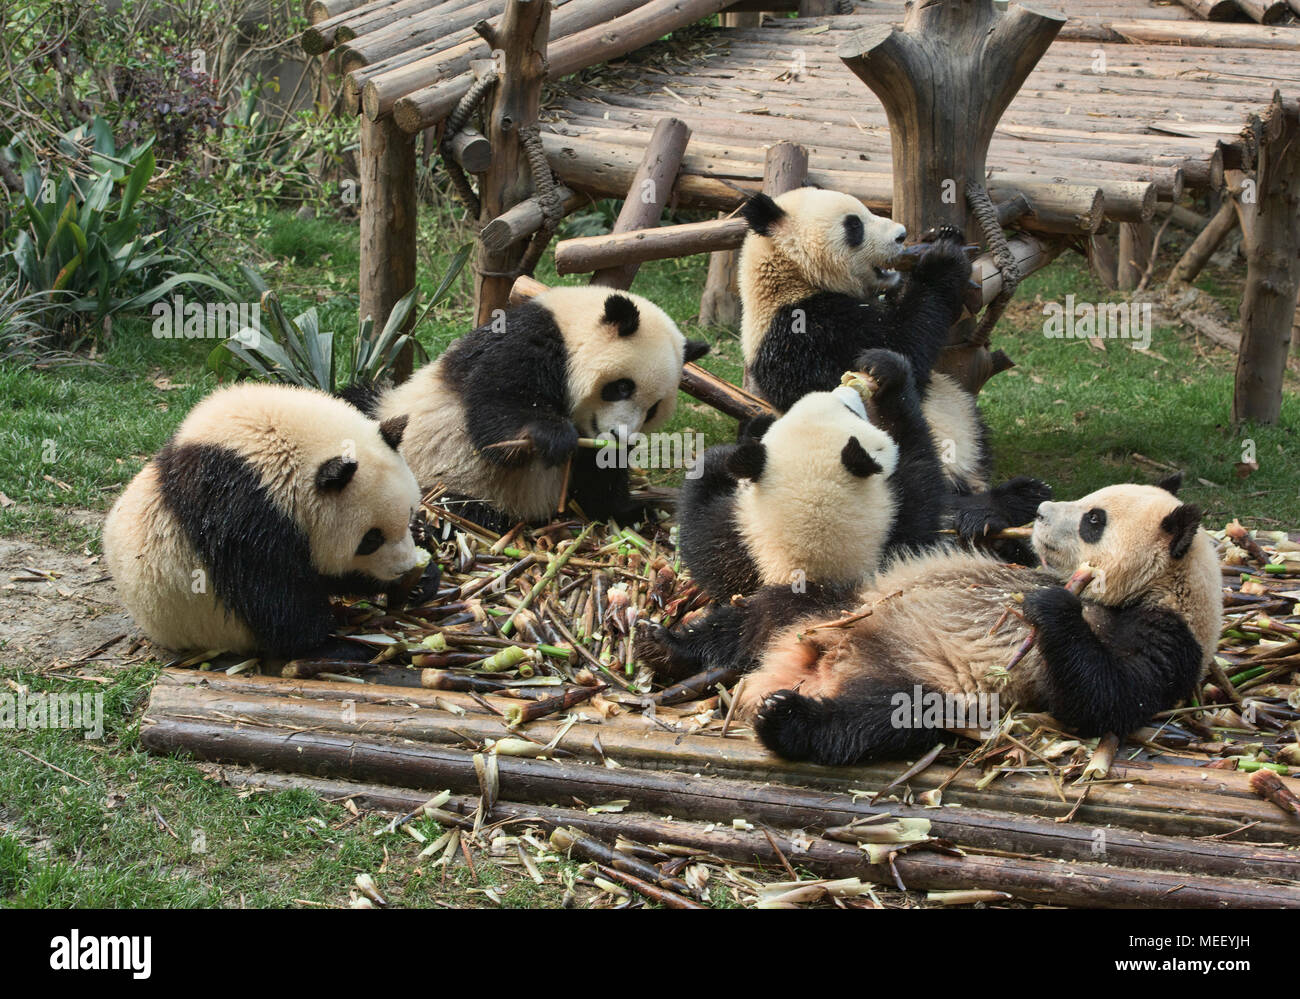 Giant pandas eating bamboo at the Chengdu Research Base of Giant Panda  Breeding in Chengdu, Sichuan, China Stock Photo - Alamy